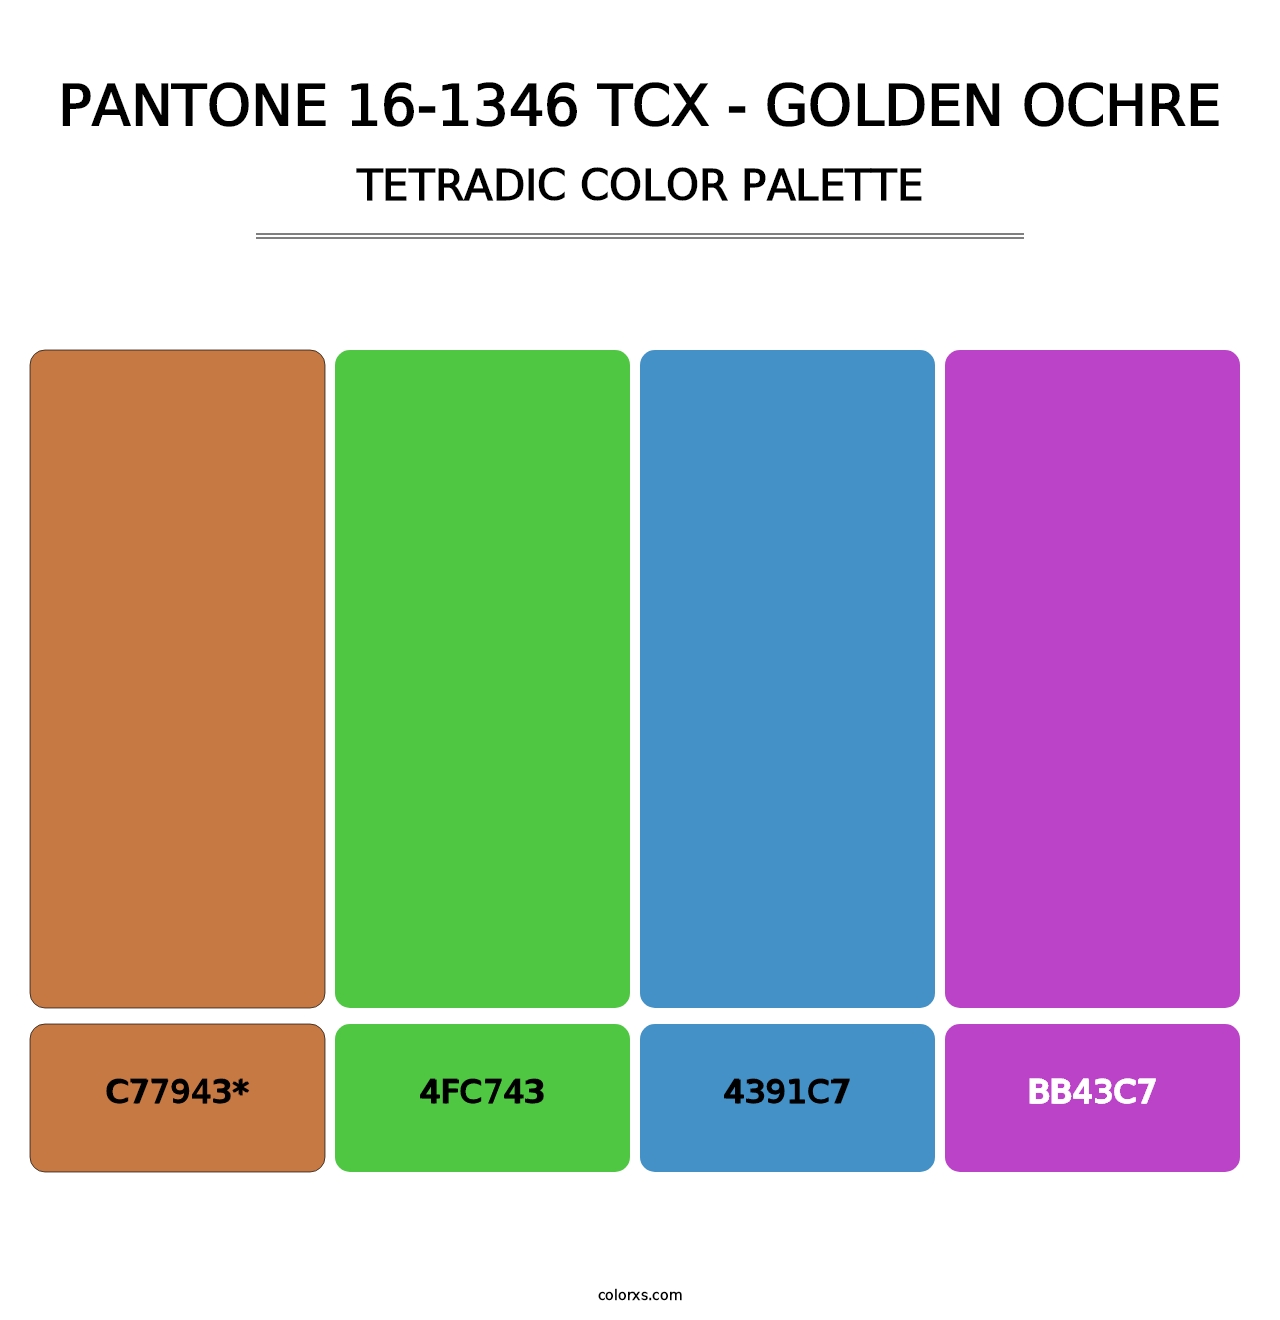 PANTONE 16-1346 TCX - Golden Ochre - Tetradic Color Palette